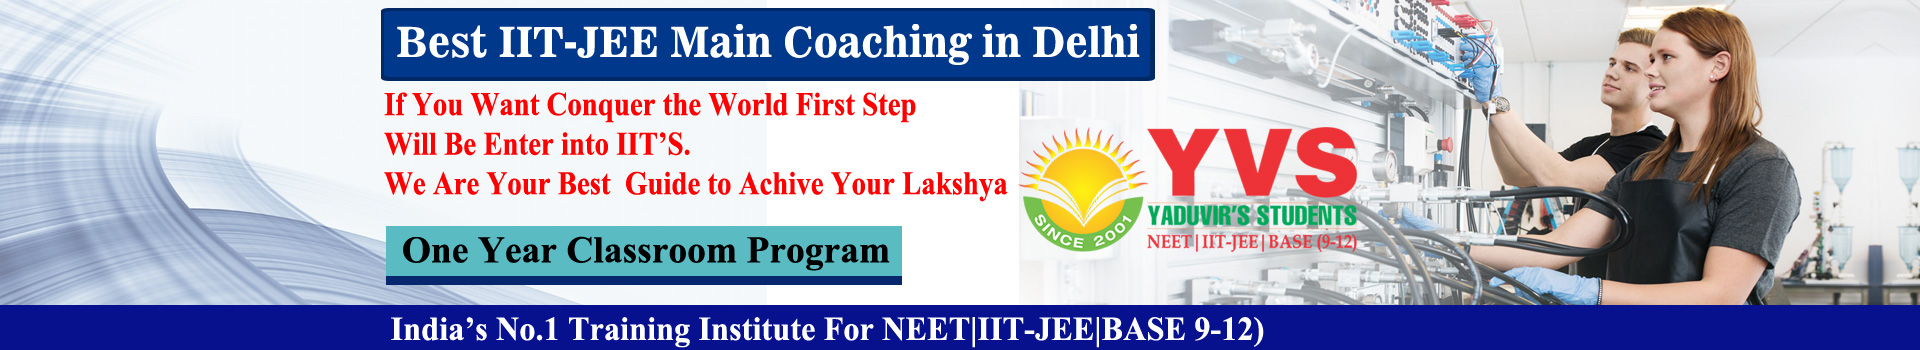 Best IIT-JEE Main Coaching in Delhi